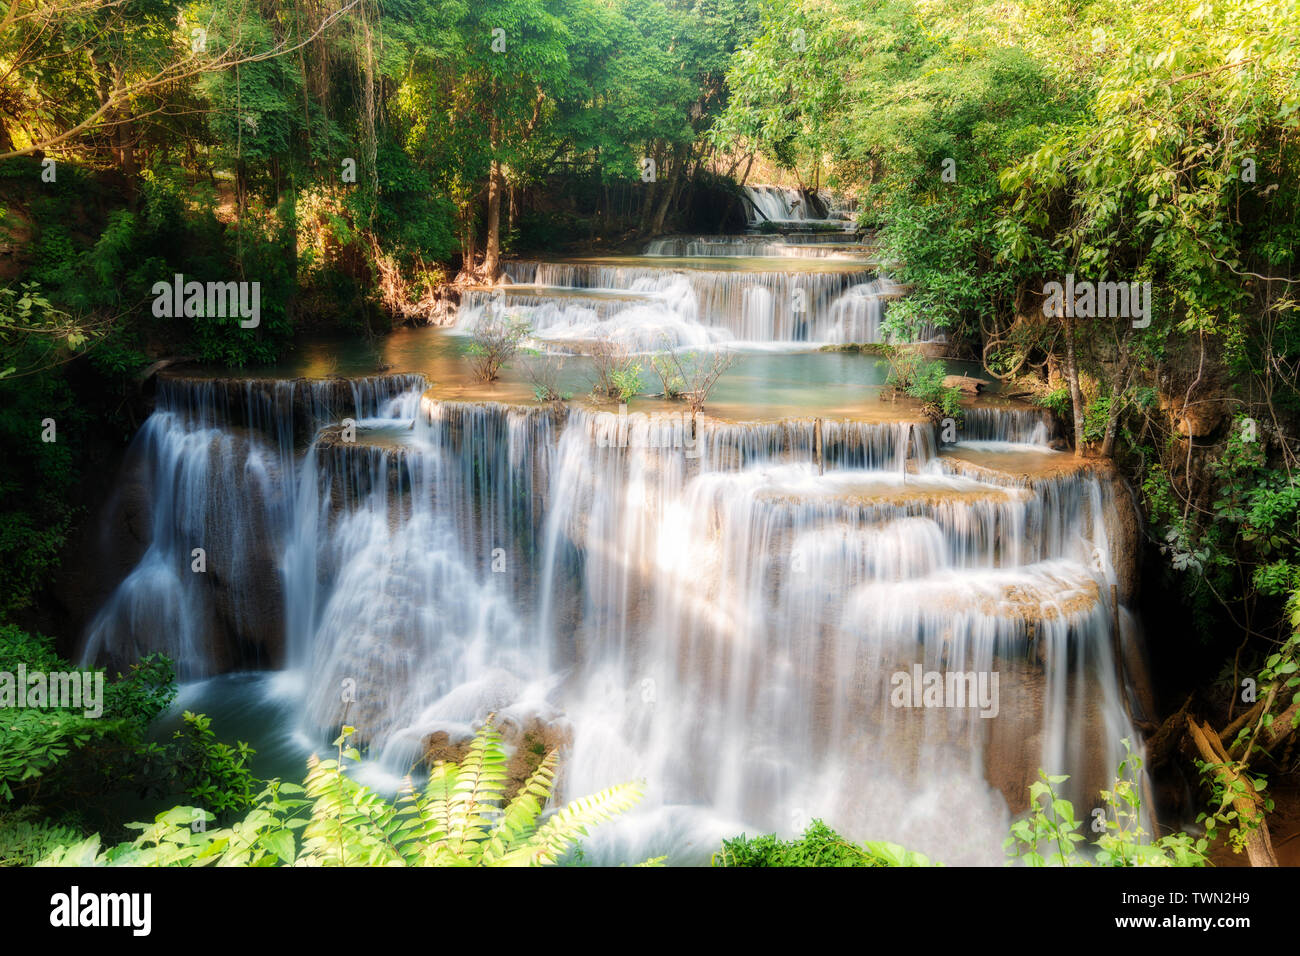 Huay MaeKamin Wasserfall ist schöner Wasserfall im Regenwald, Provinz Kanchanaburi, Thailand. Stockfoto